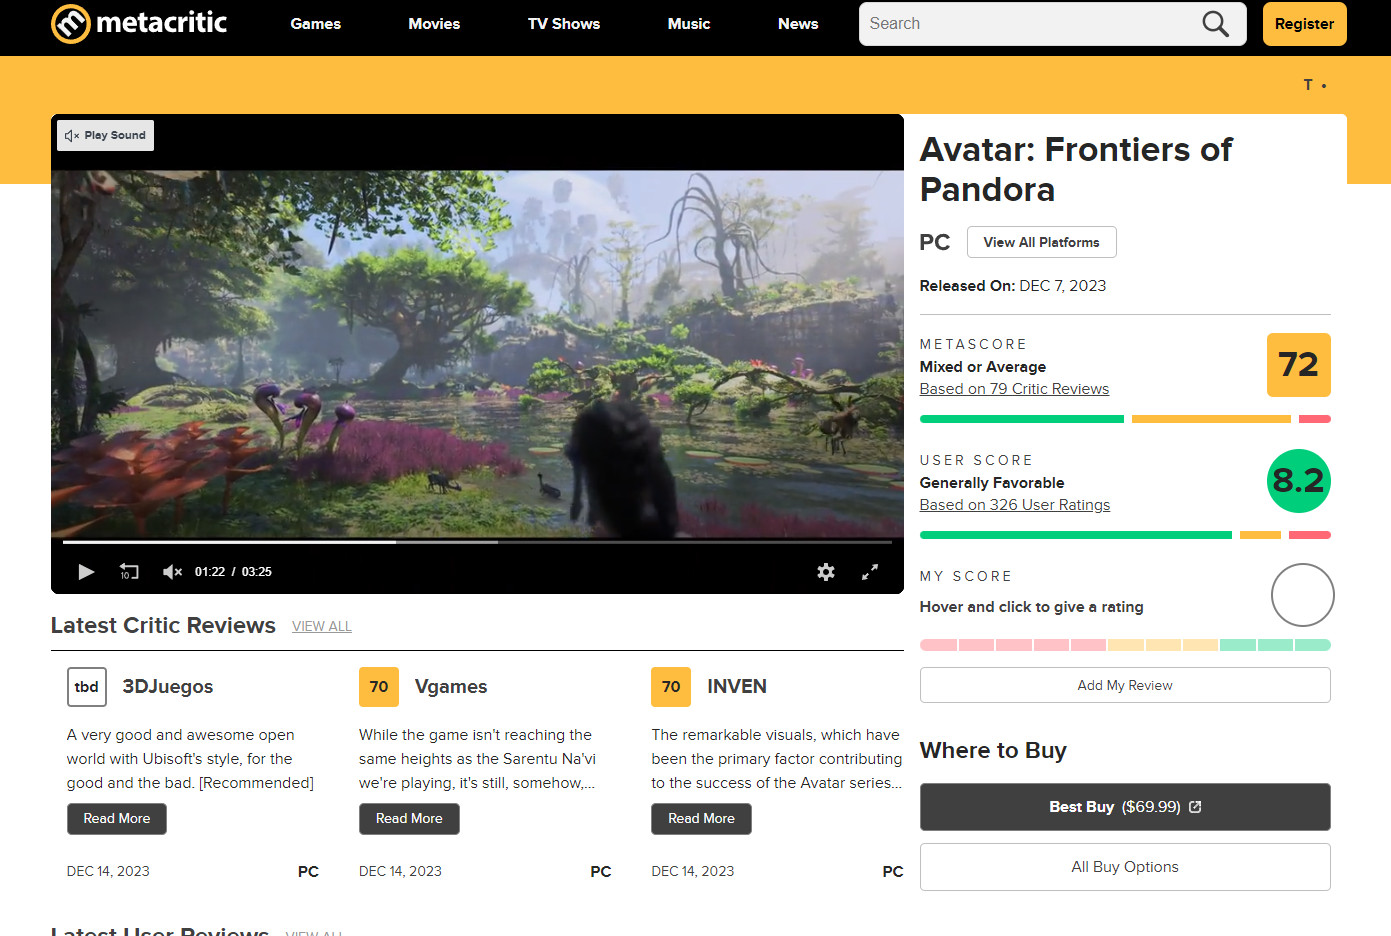 《阿凡达：潘多拉边境》成育碧近年玩家风评最好的一作